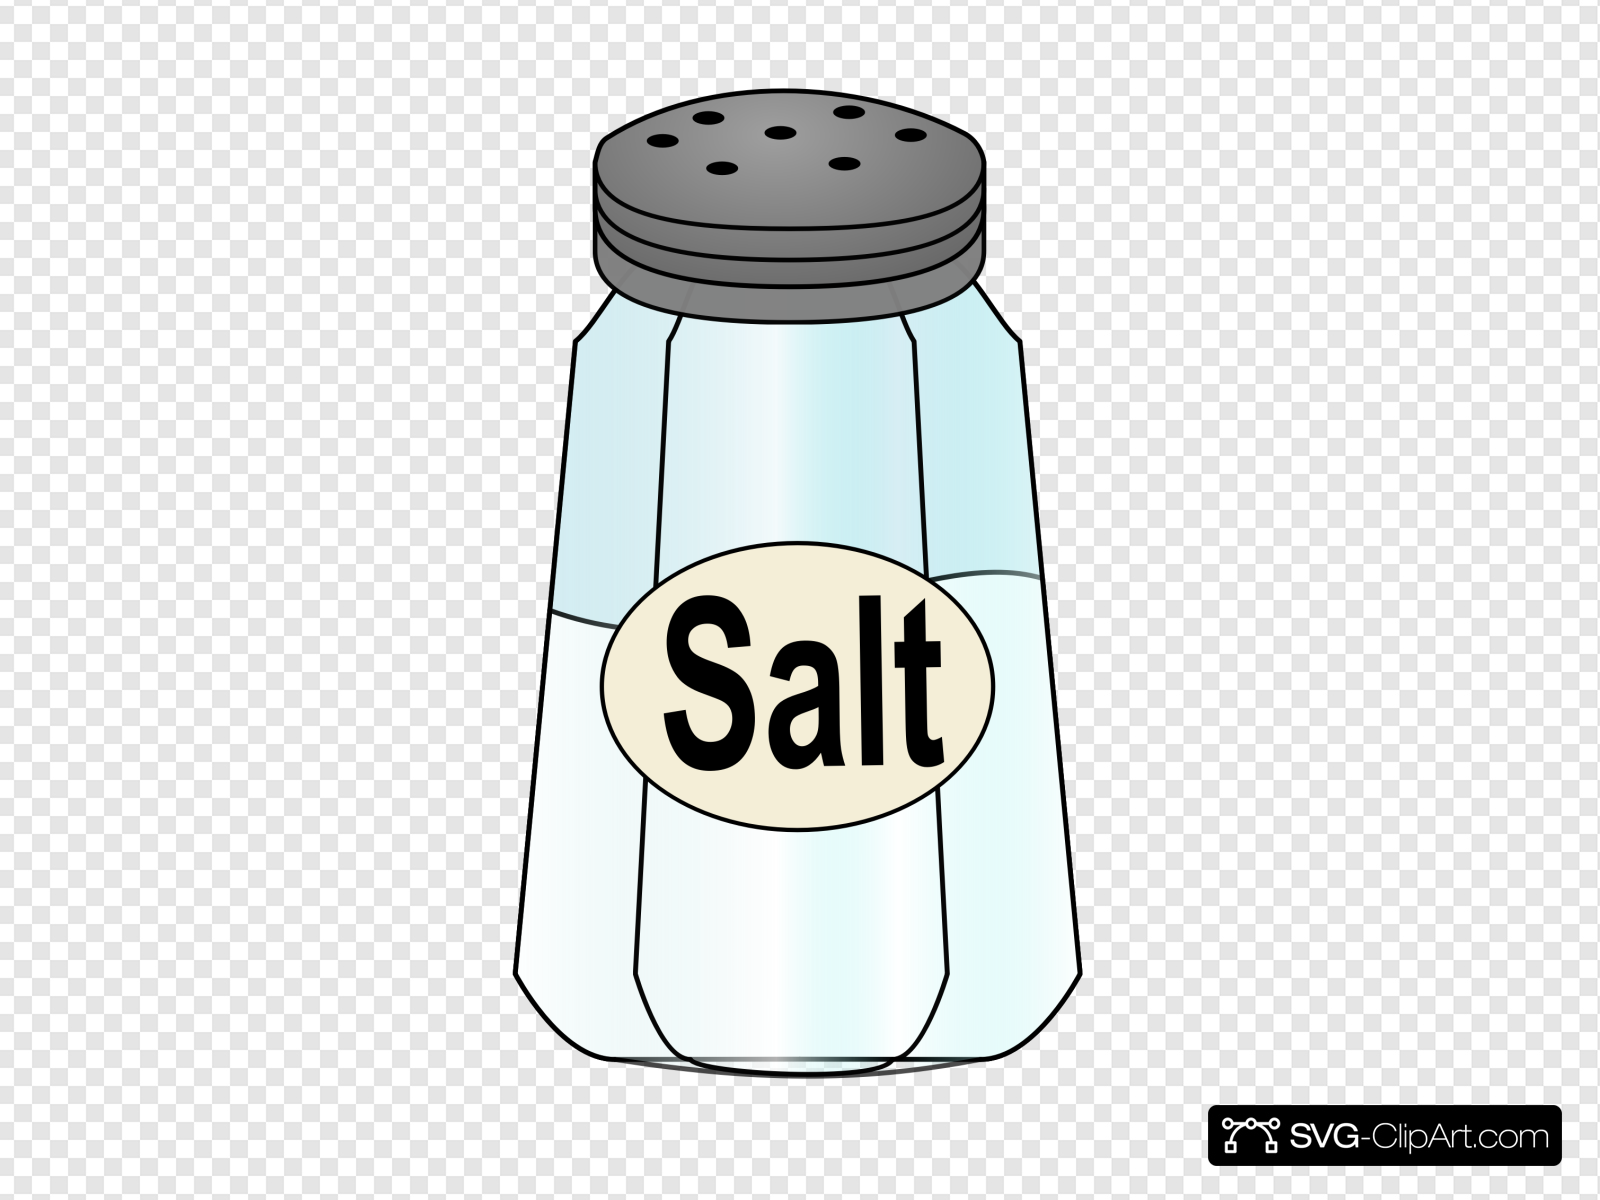 Salt Shaker Clip art, Icon and SVG.